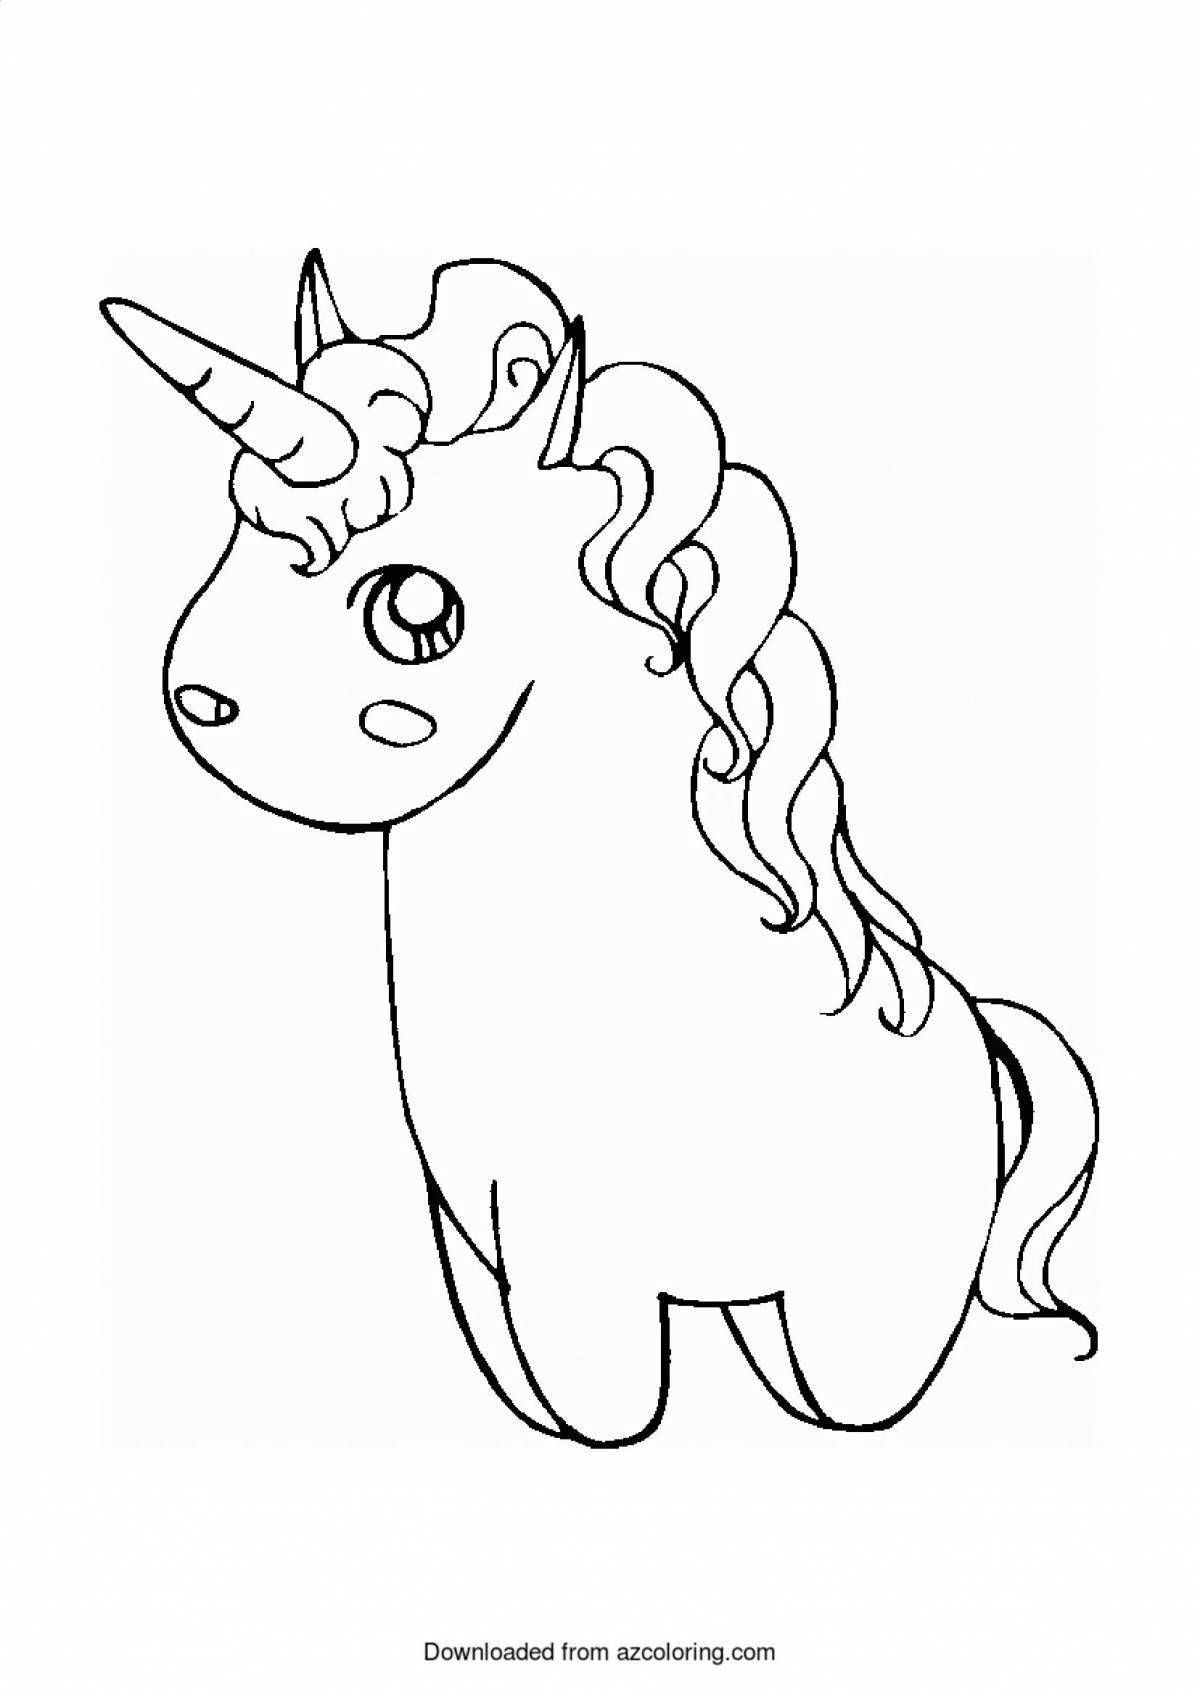 Radiant coloring page unicorn cartoon